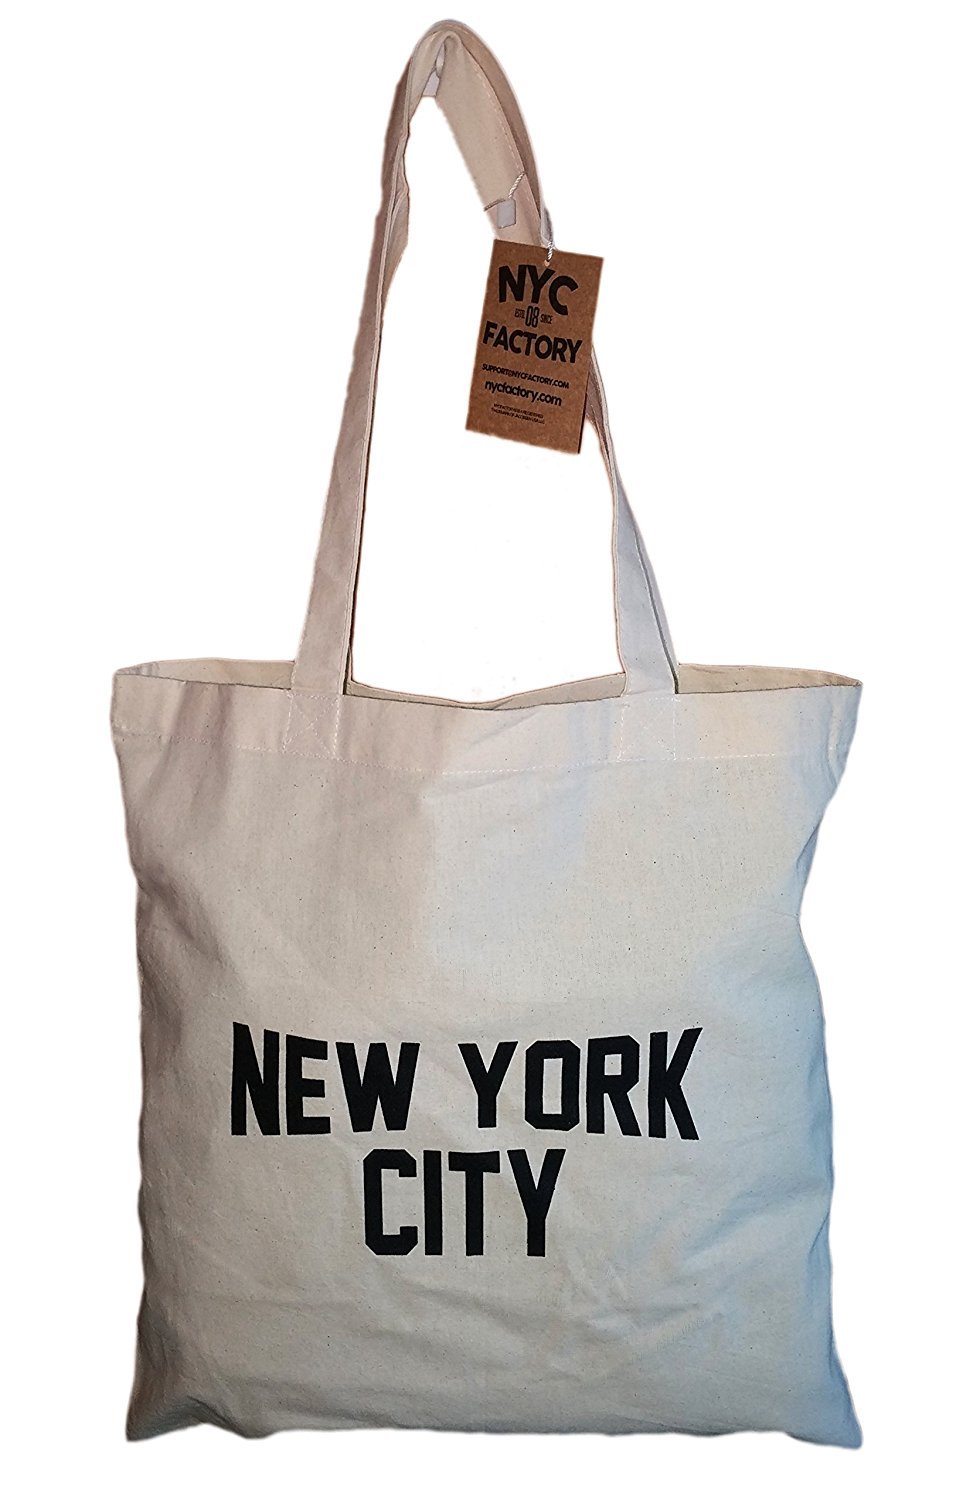 NYC Tote Bag New York City 100% Cotton Canvas Screenprinted